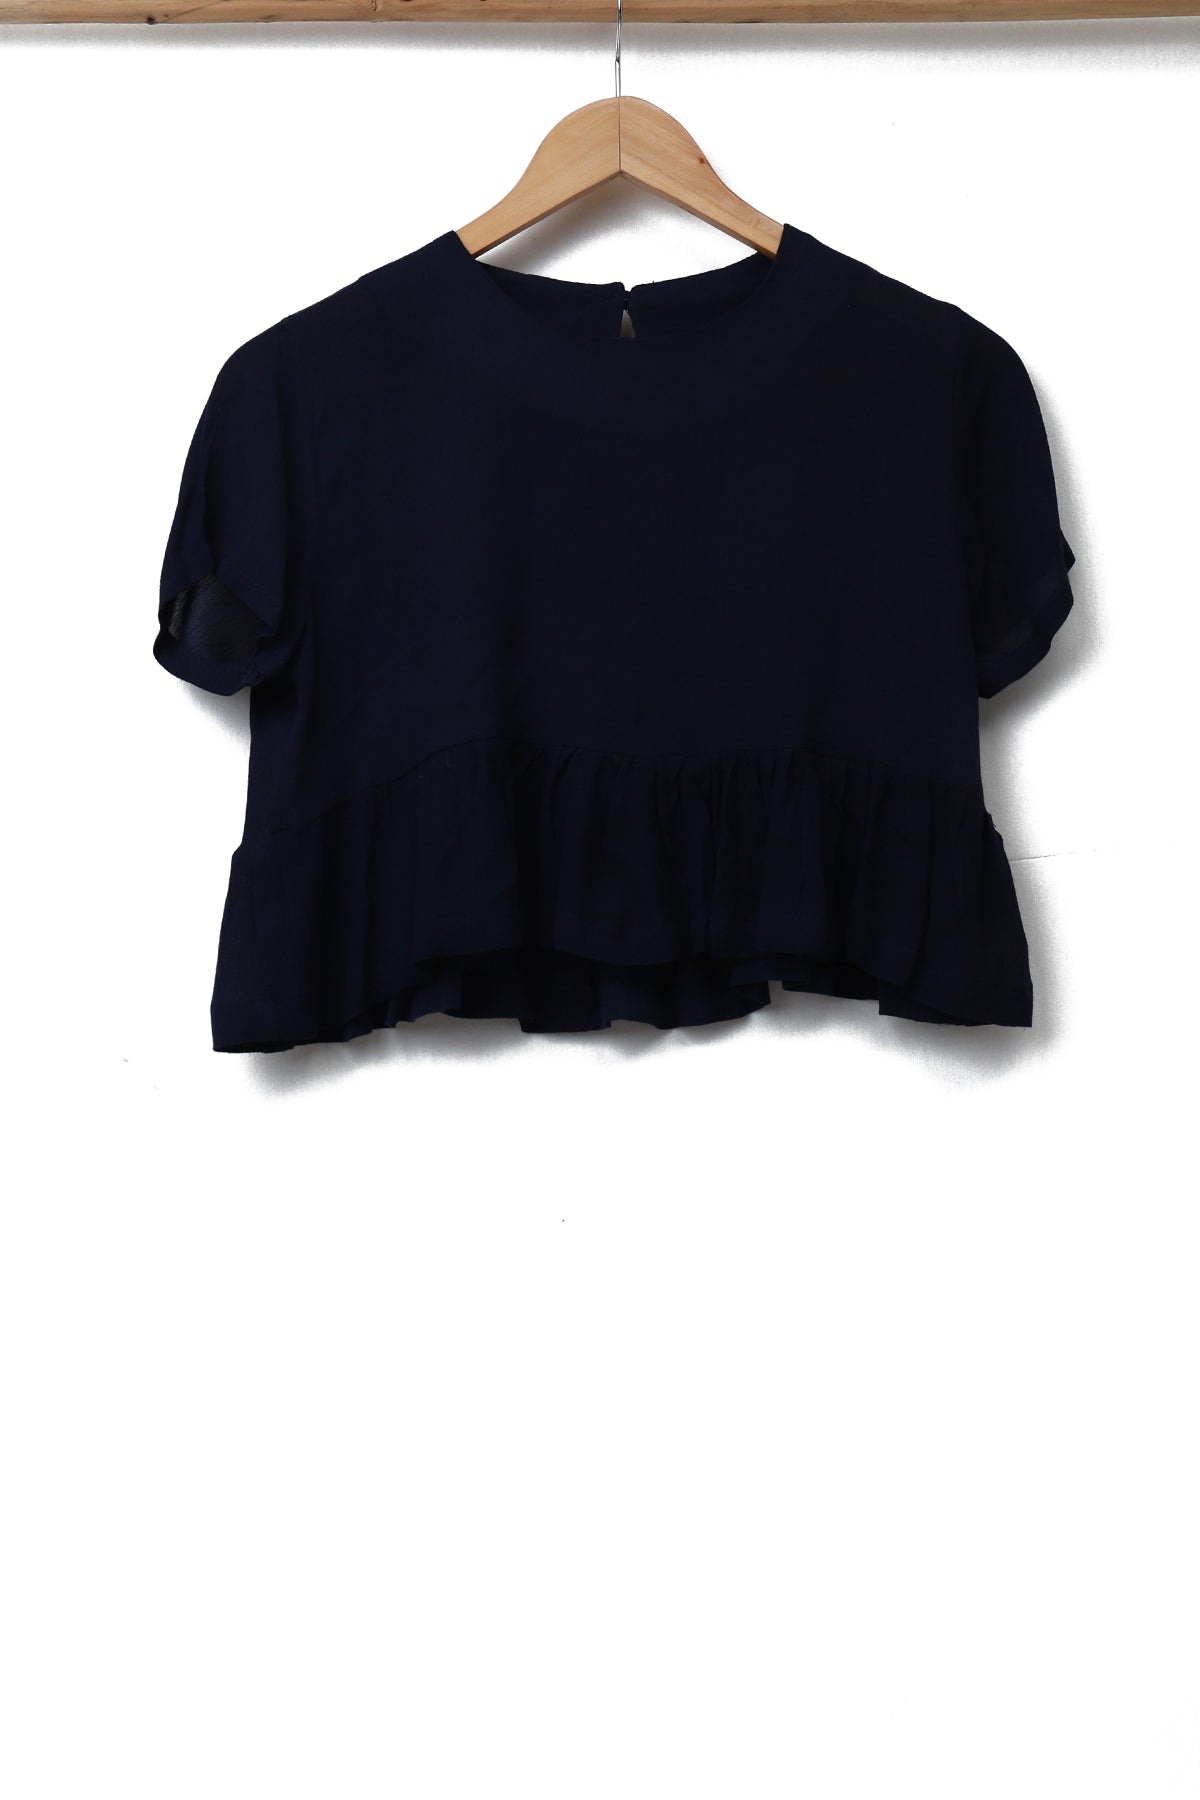 Modano Women's Short Sleeve Casual Top